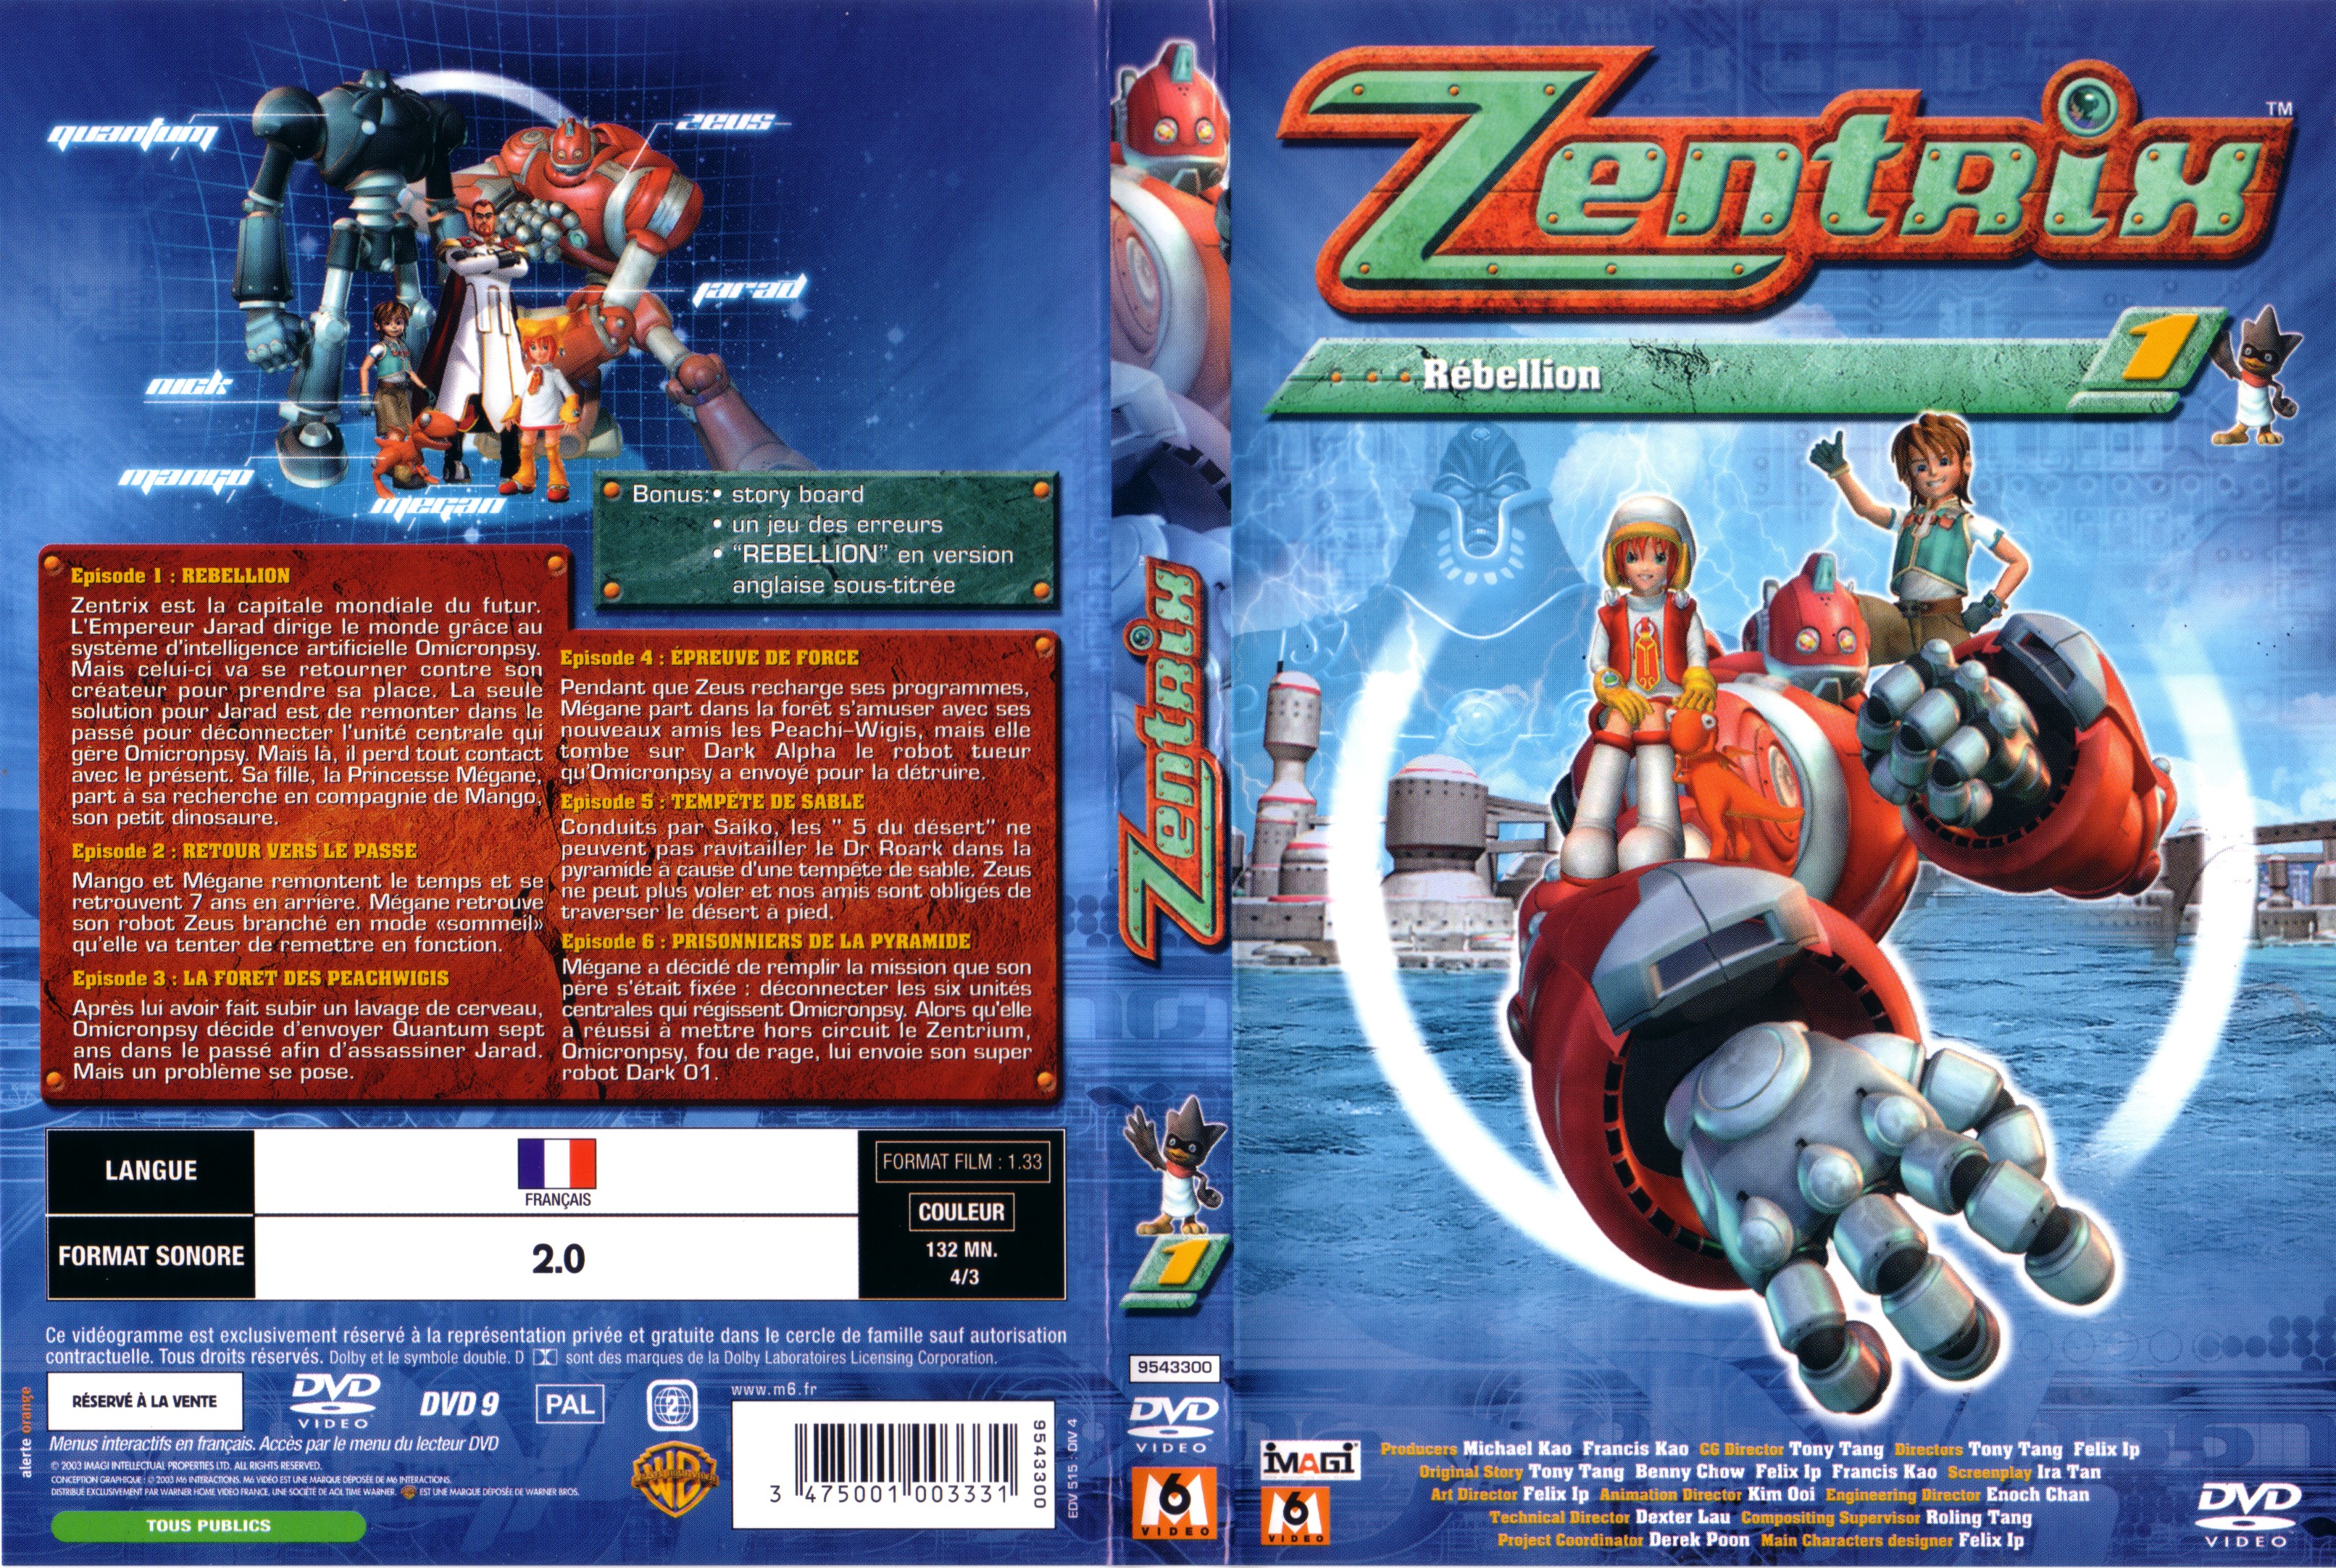 Jaquette DVD Zentrix vol 01